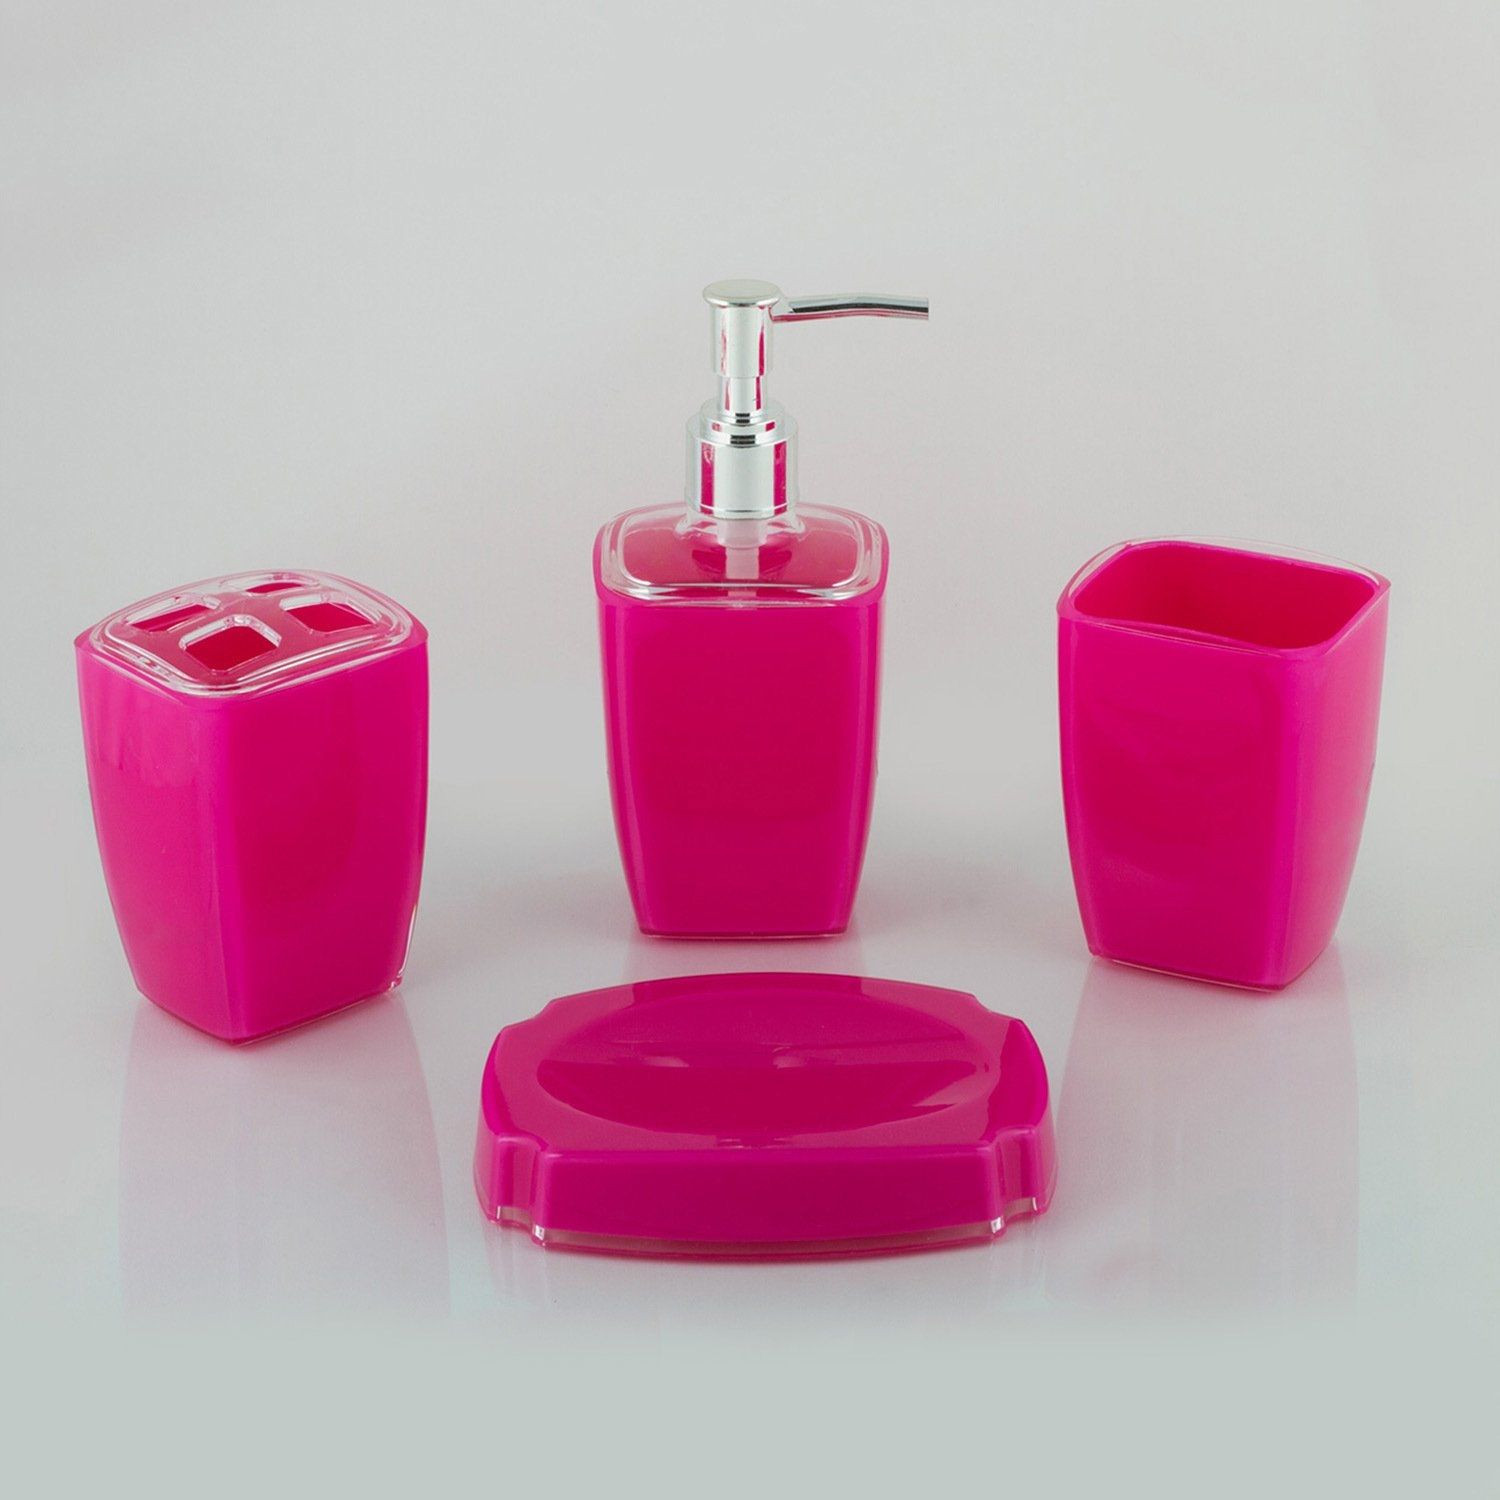 Light Pink Bathroom Rug
 Hot Pink Bathroom Decorating Ideas